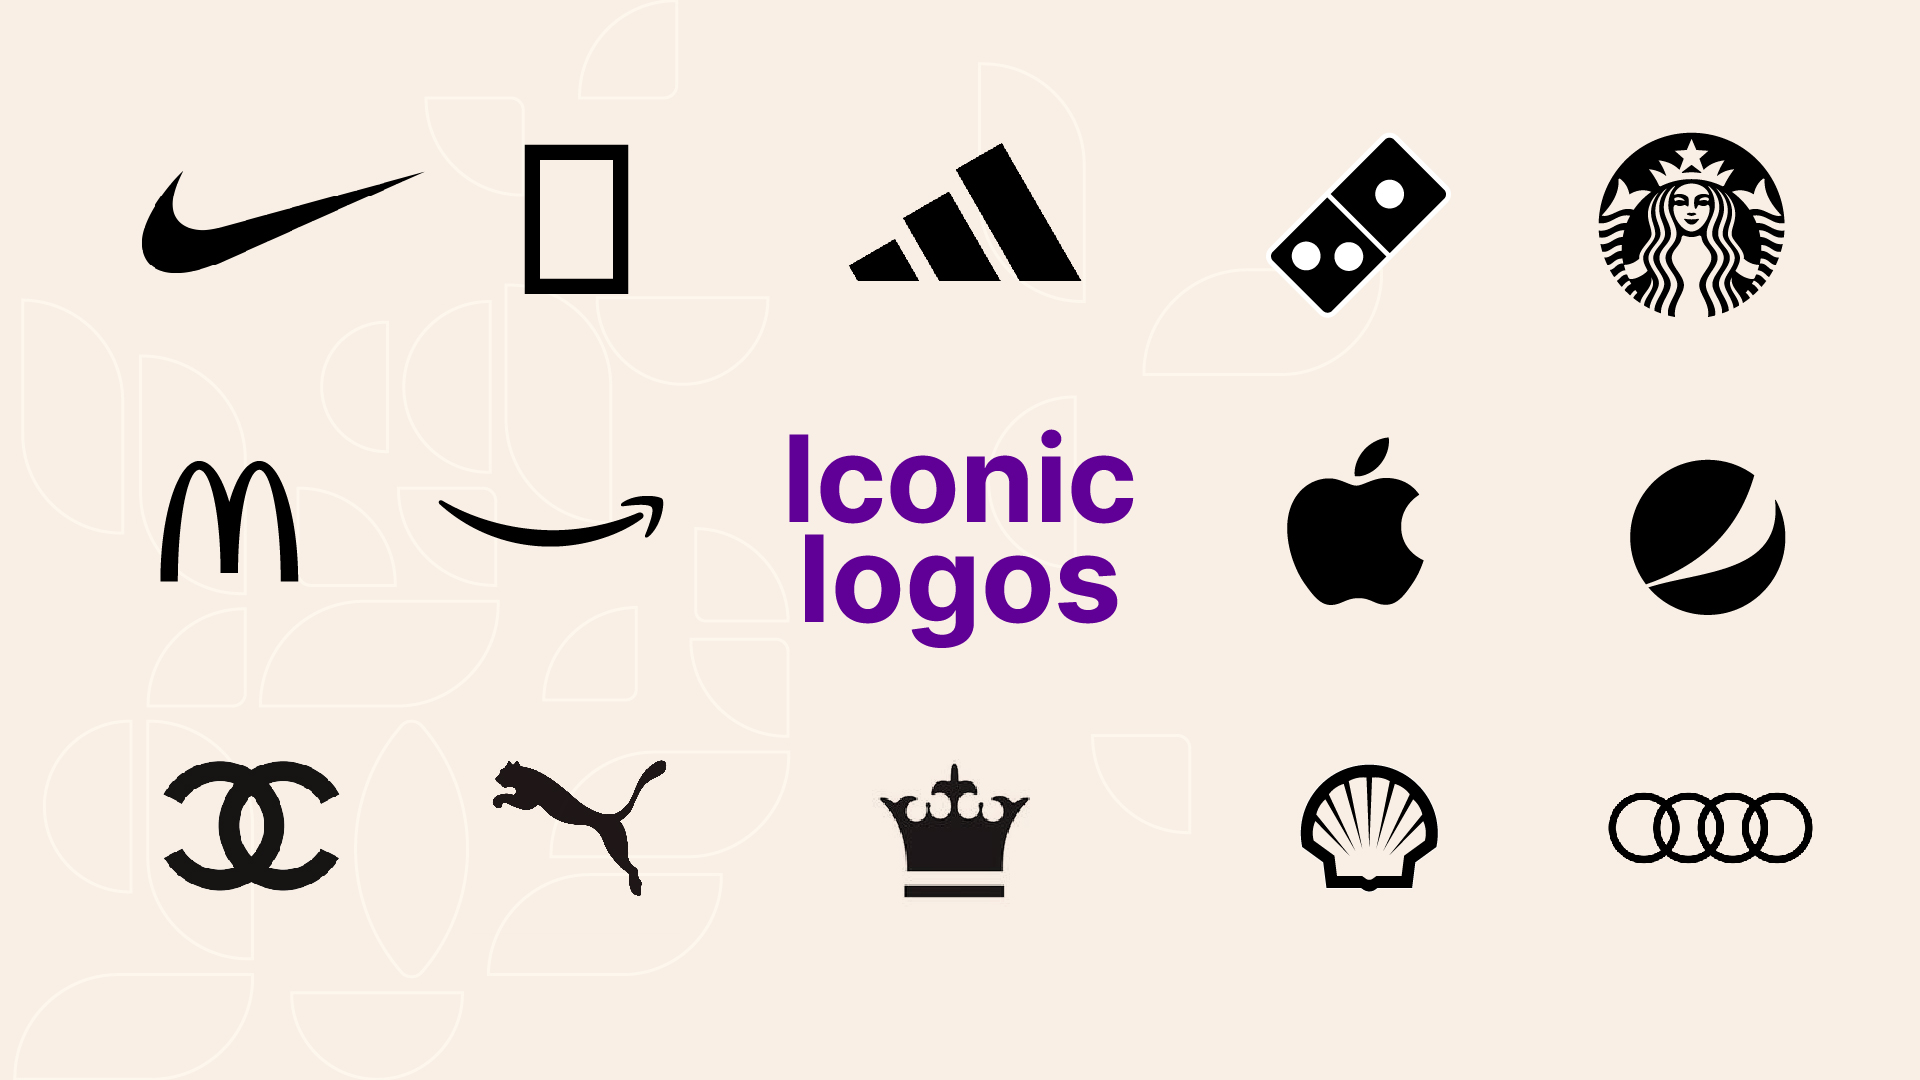 business logo designs